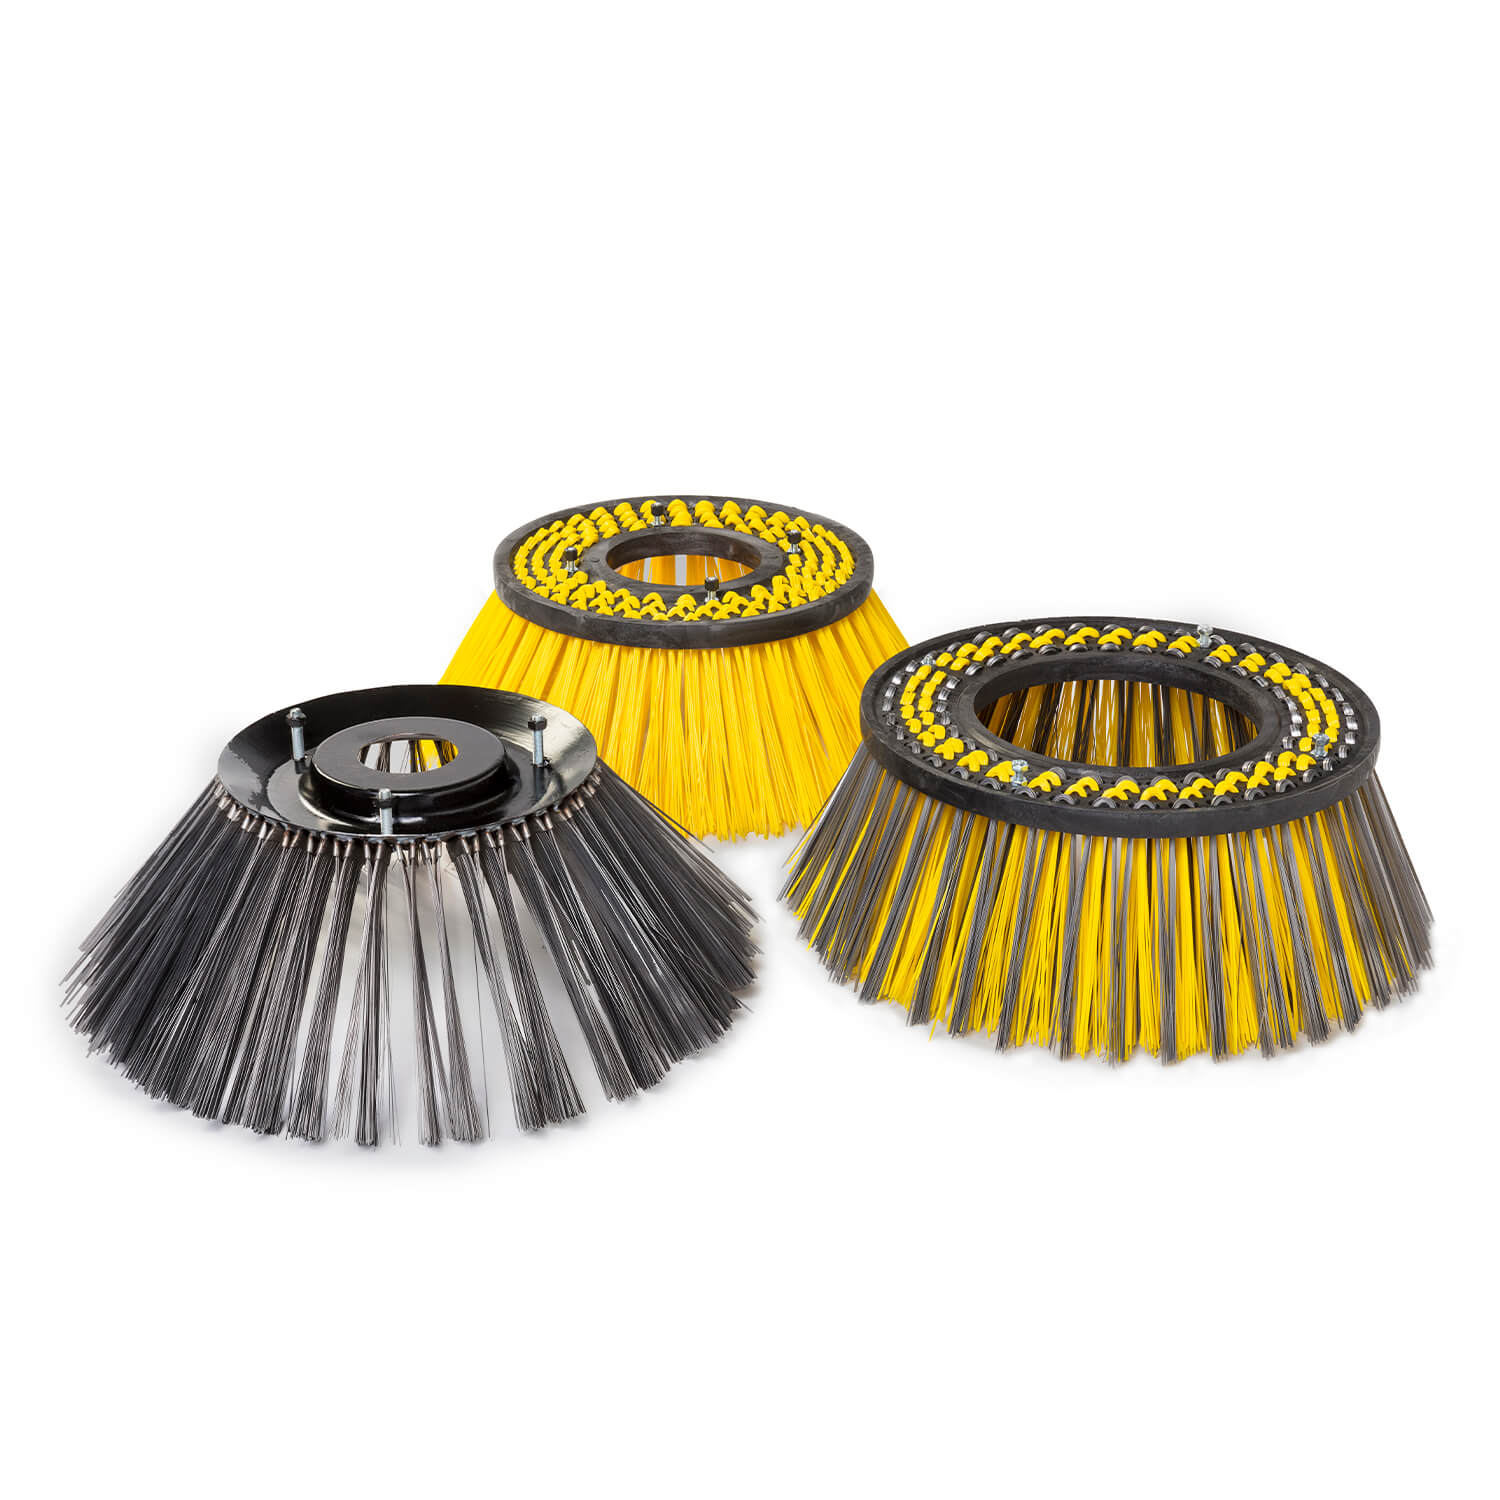 Strip brush - KOTI  EN - Industrial and Technical Brushes